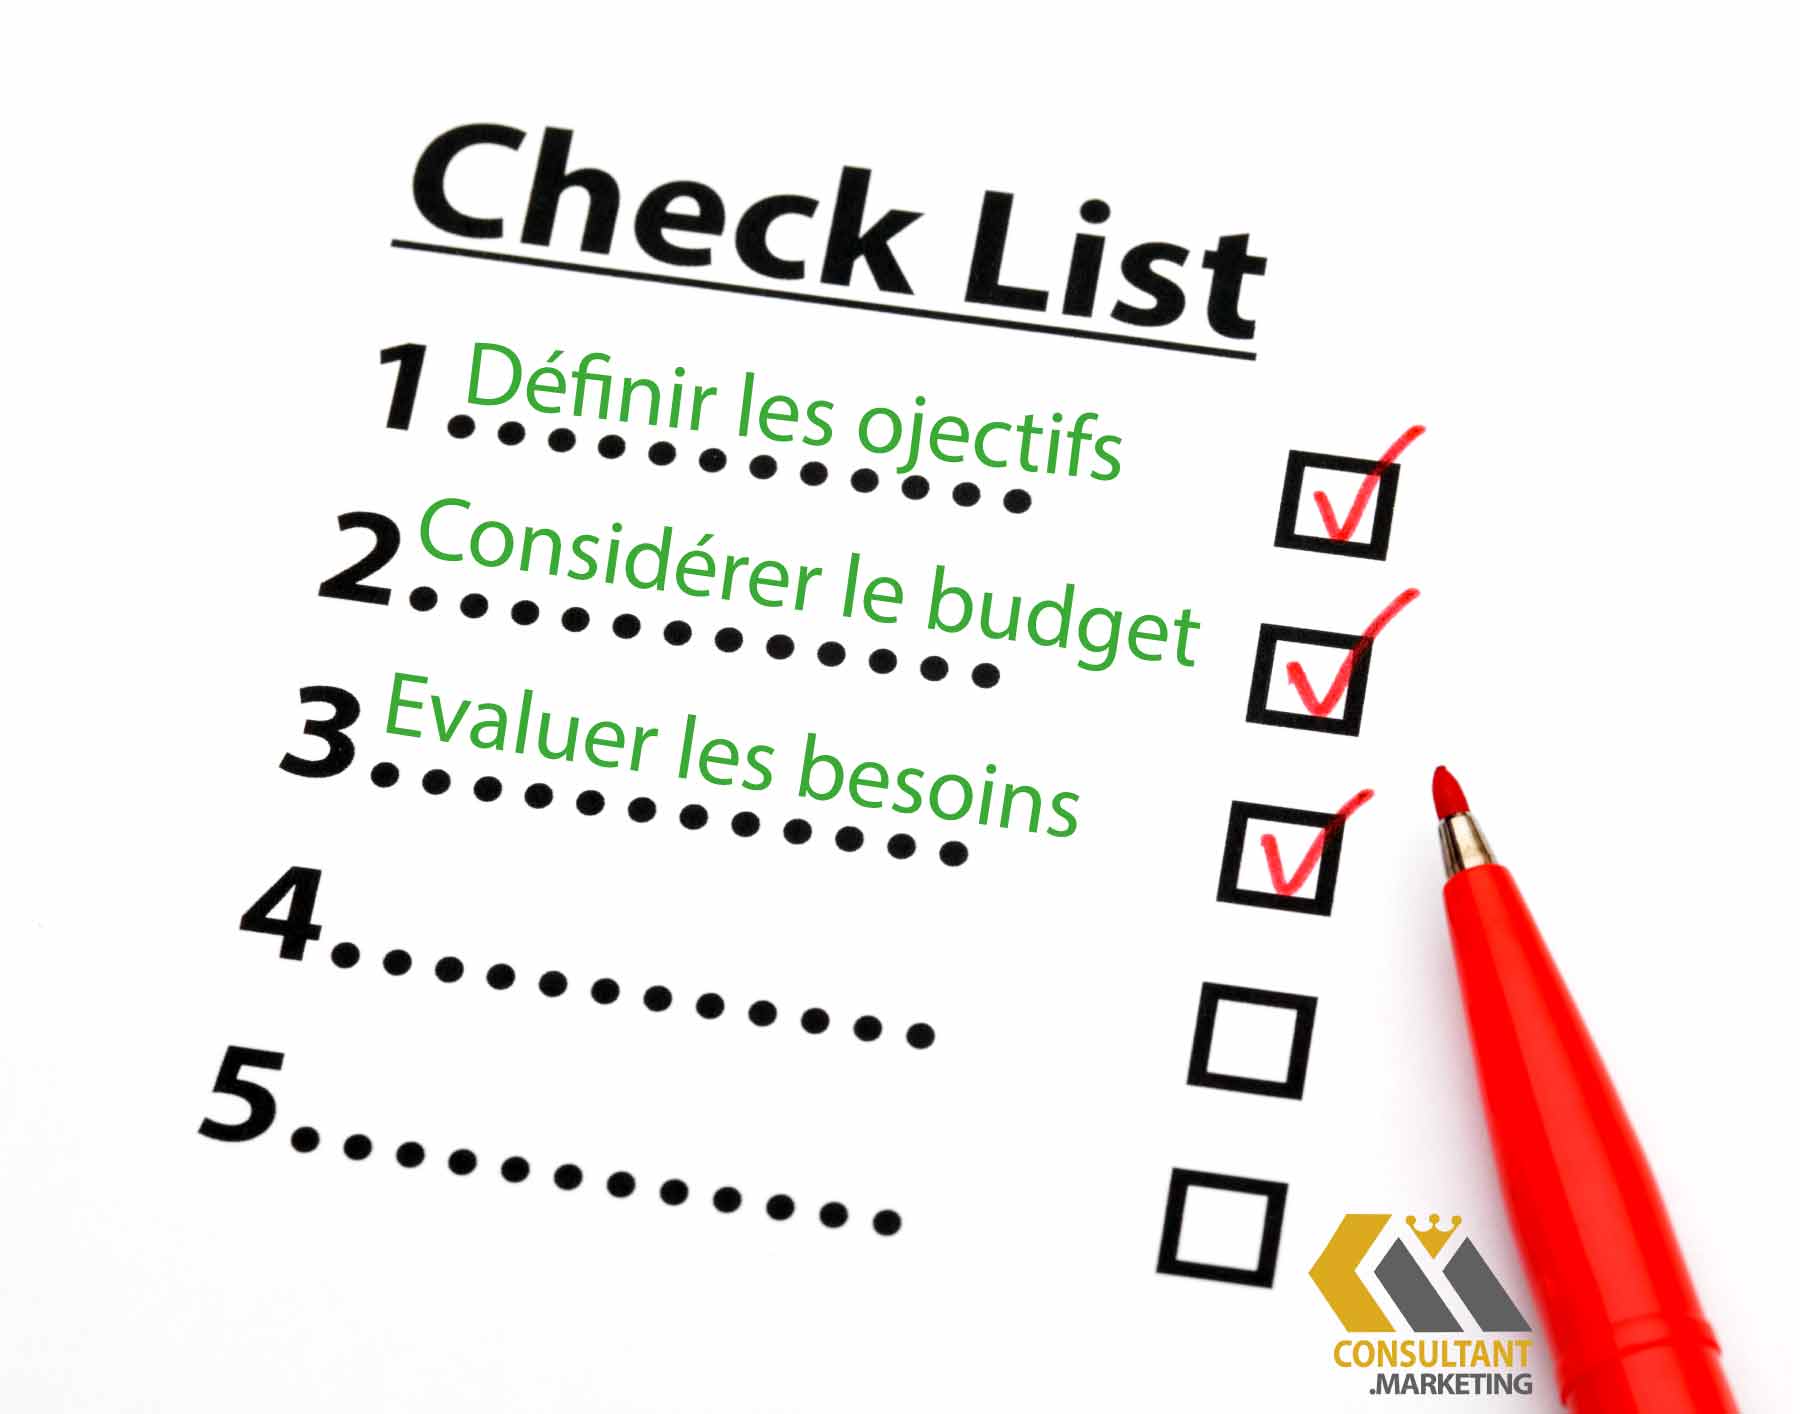 checklist du consultant marketing